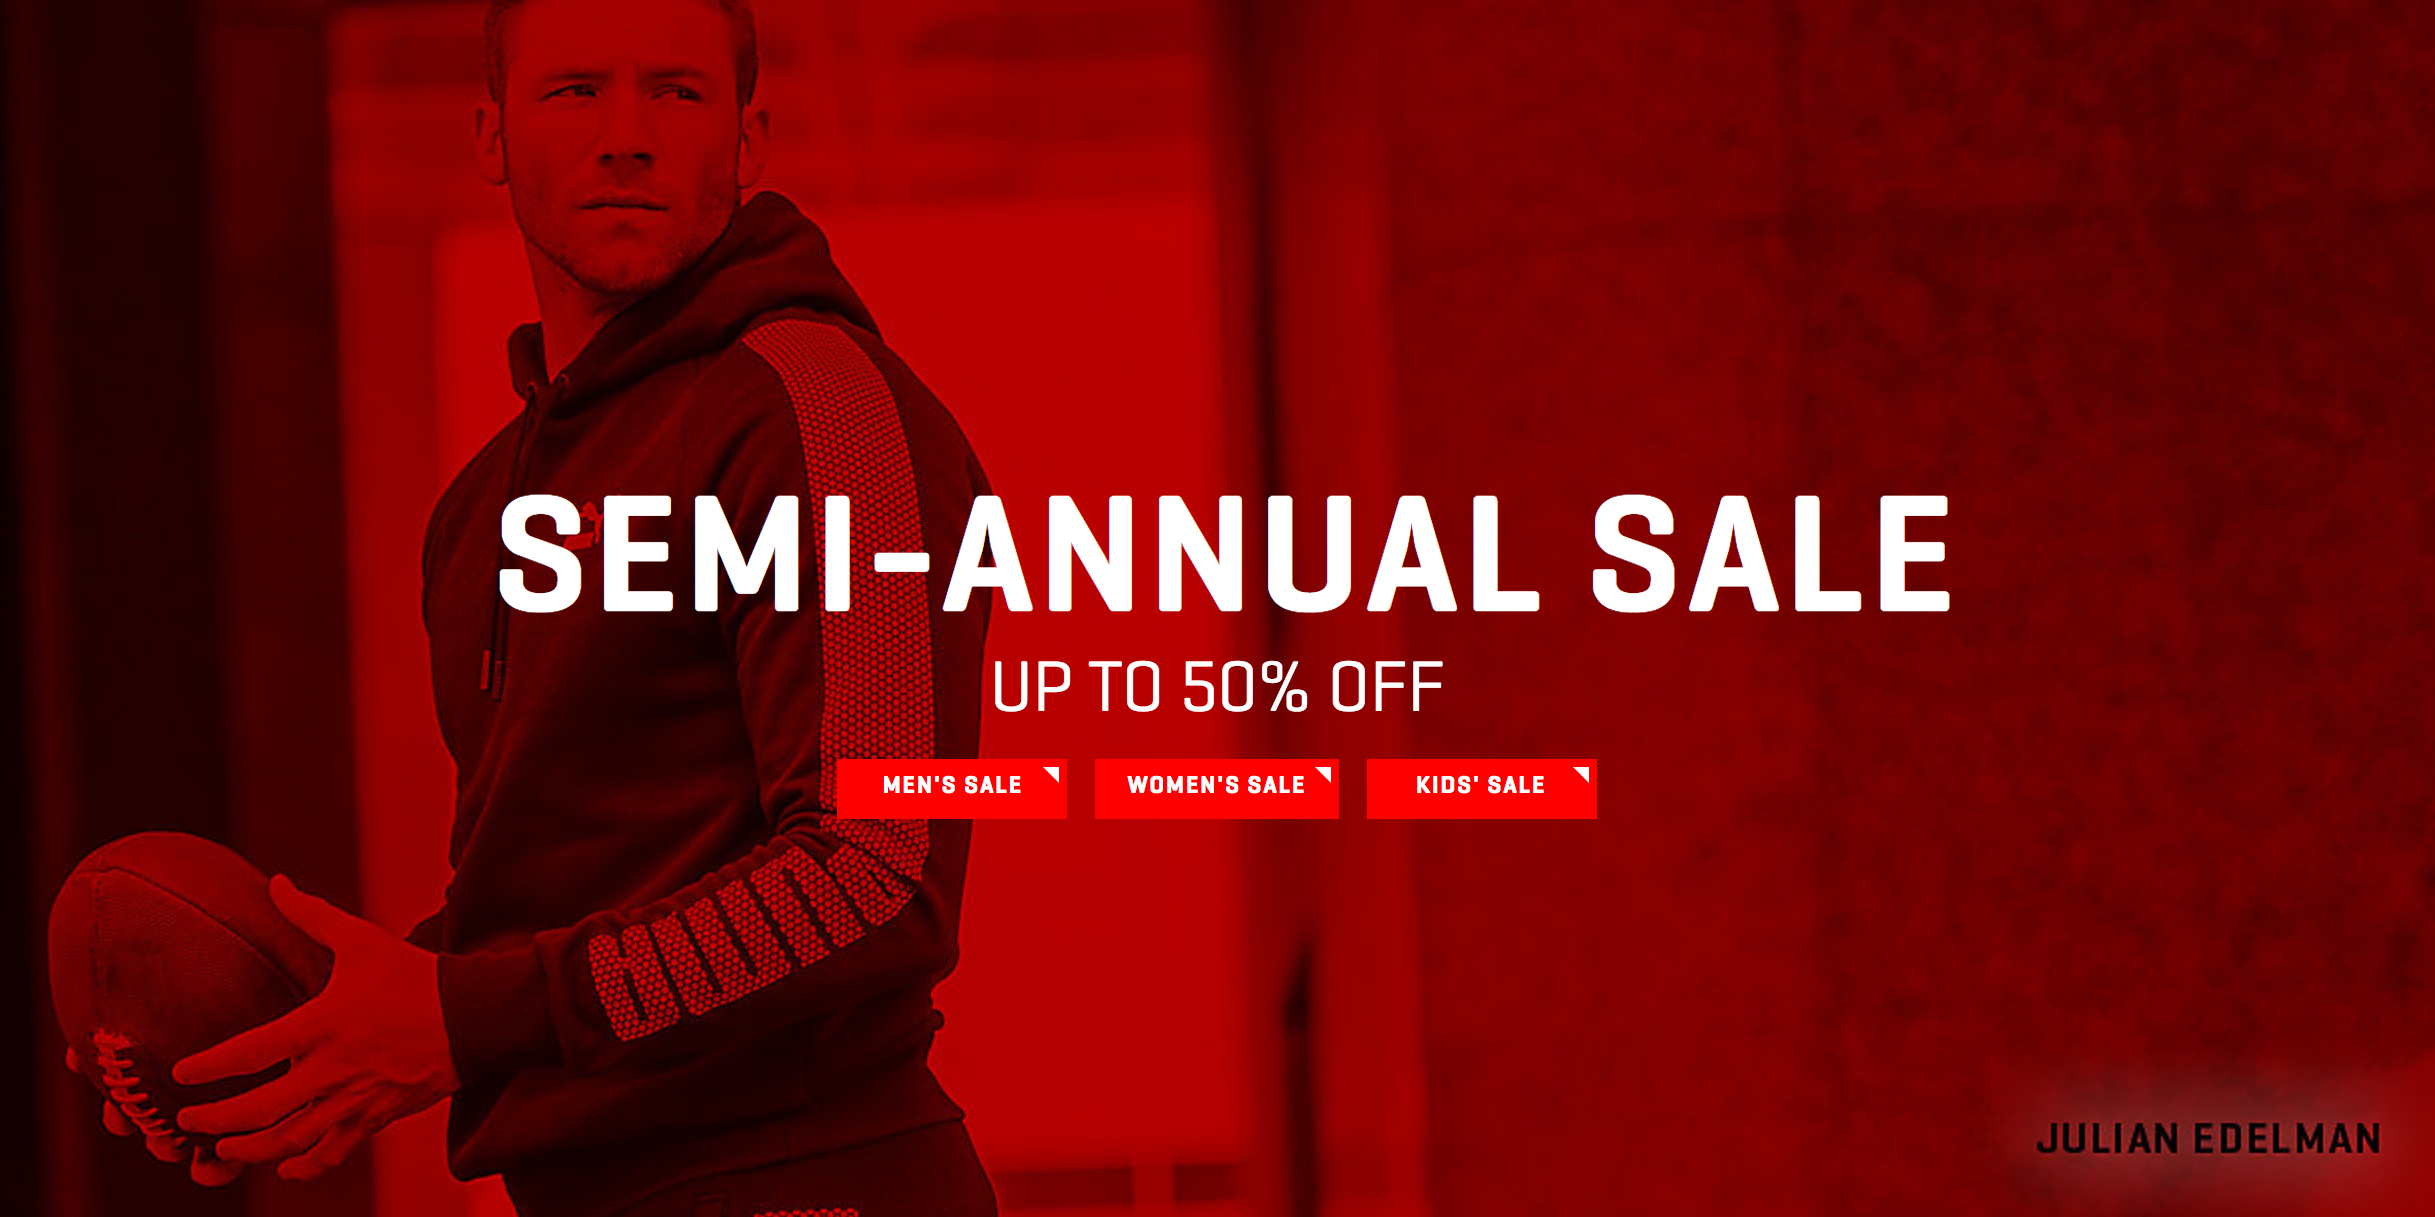 Puma's Semi-Annual Sale takes up to 50 